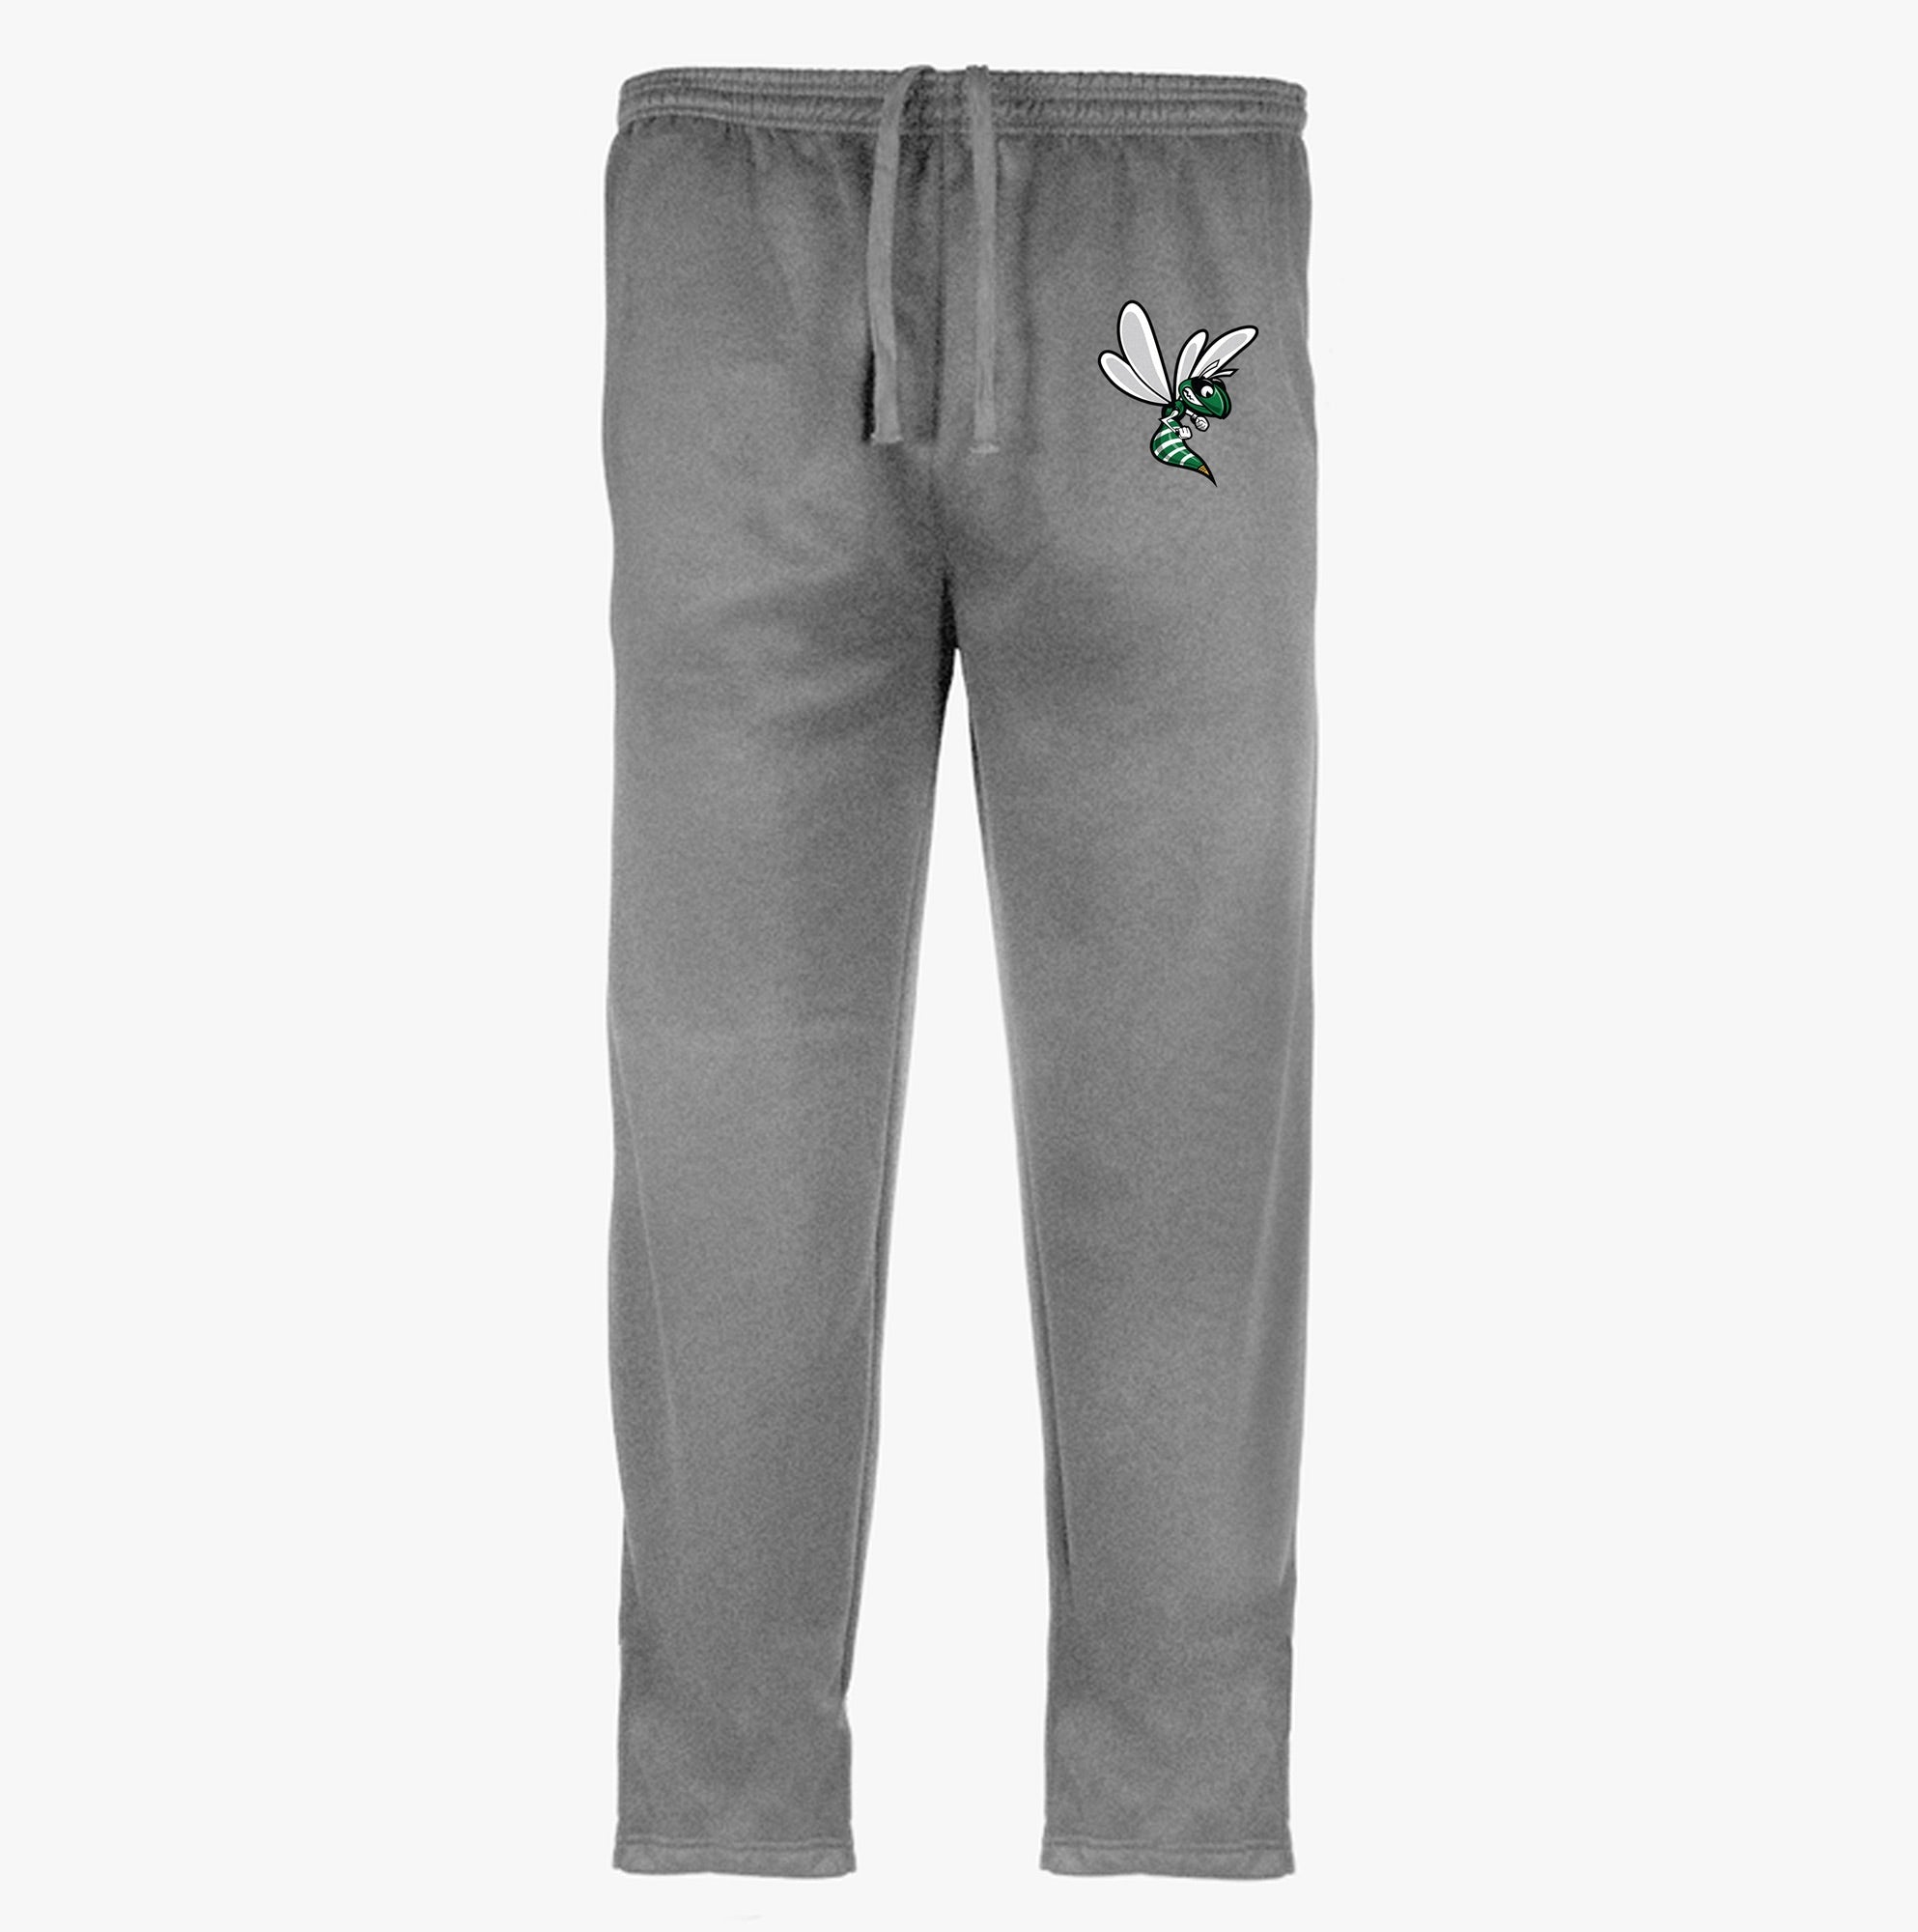 Hornet - Heathered Steel Gray - Fleece Sweatpants